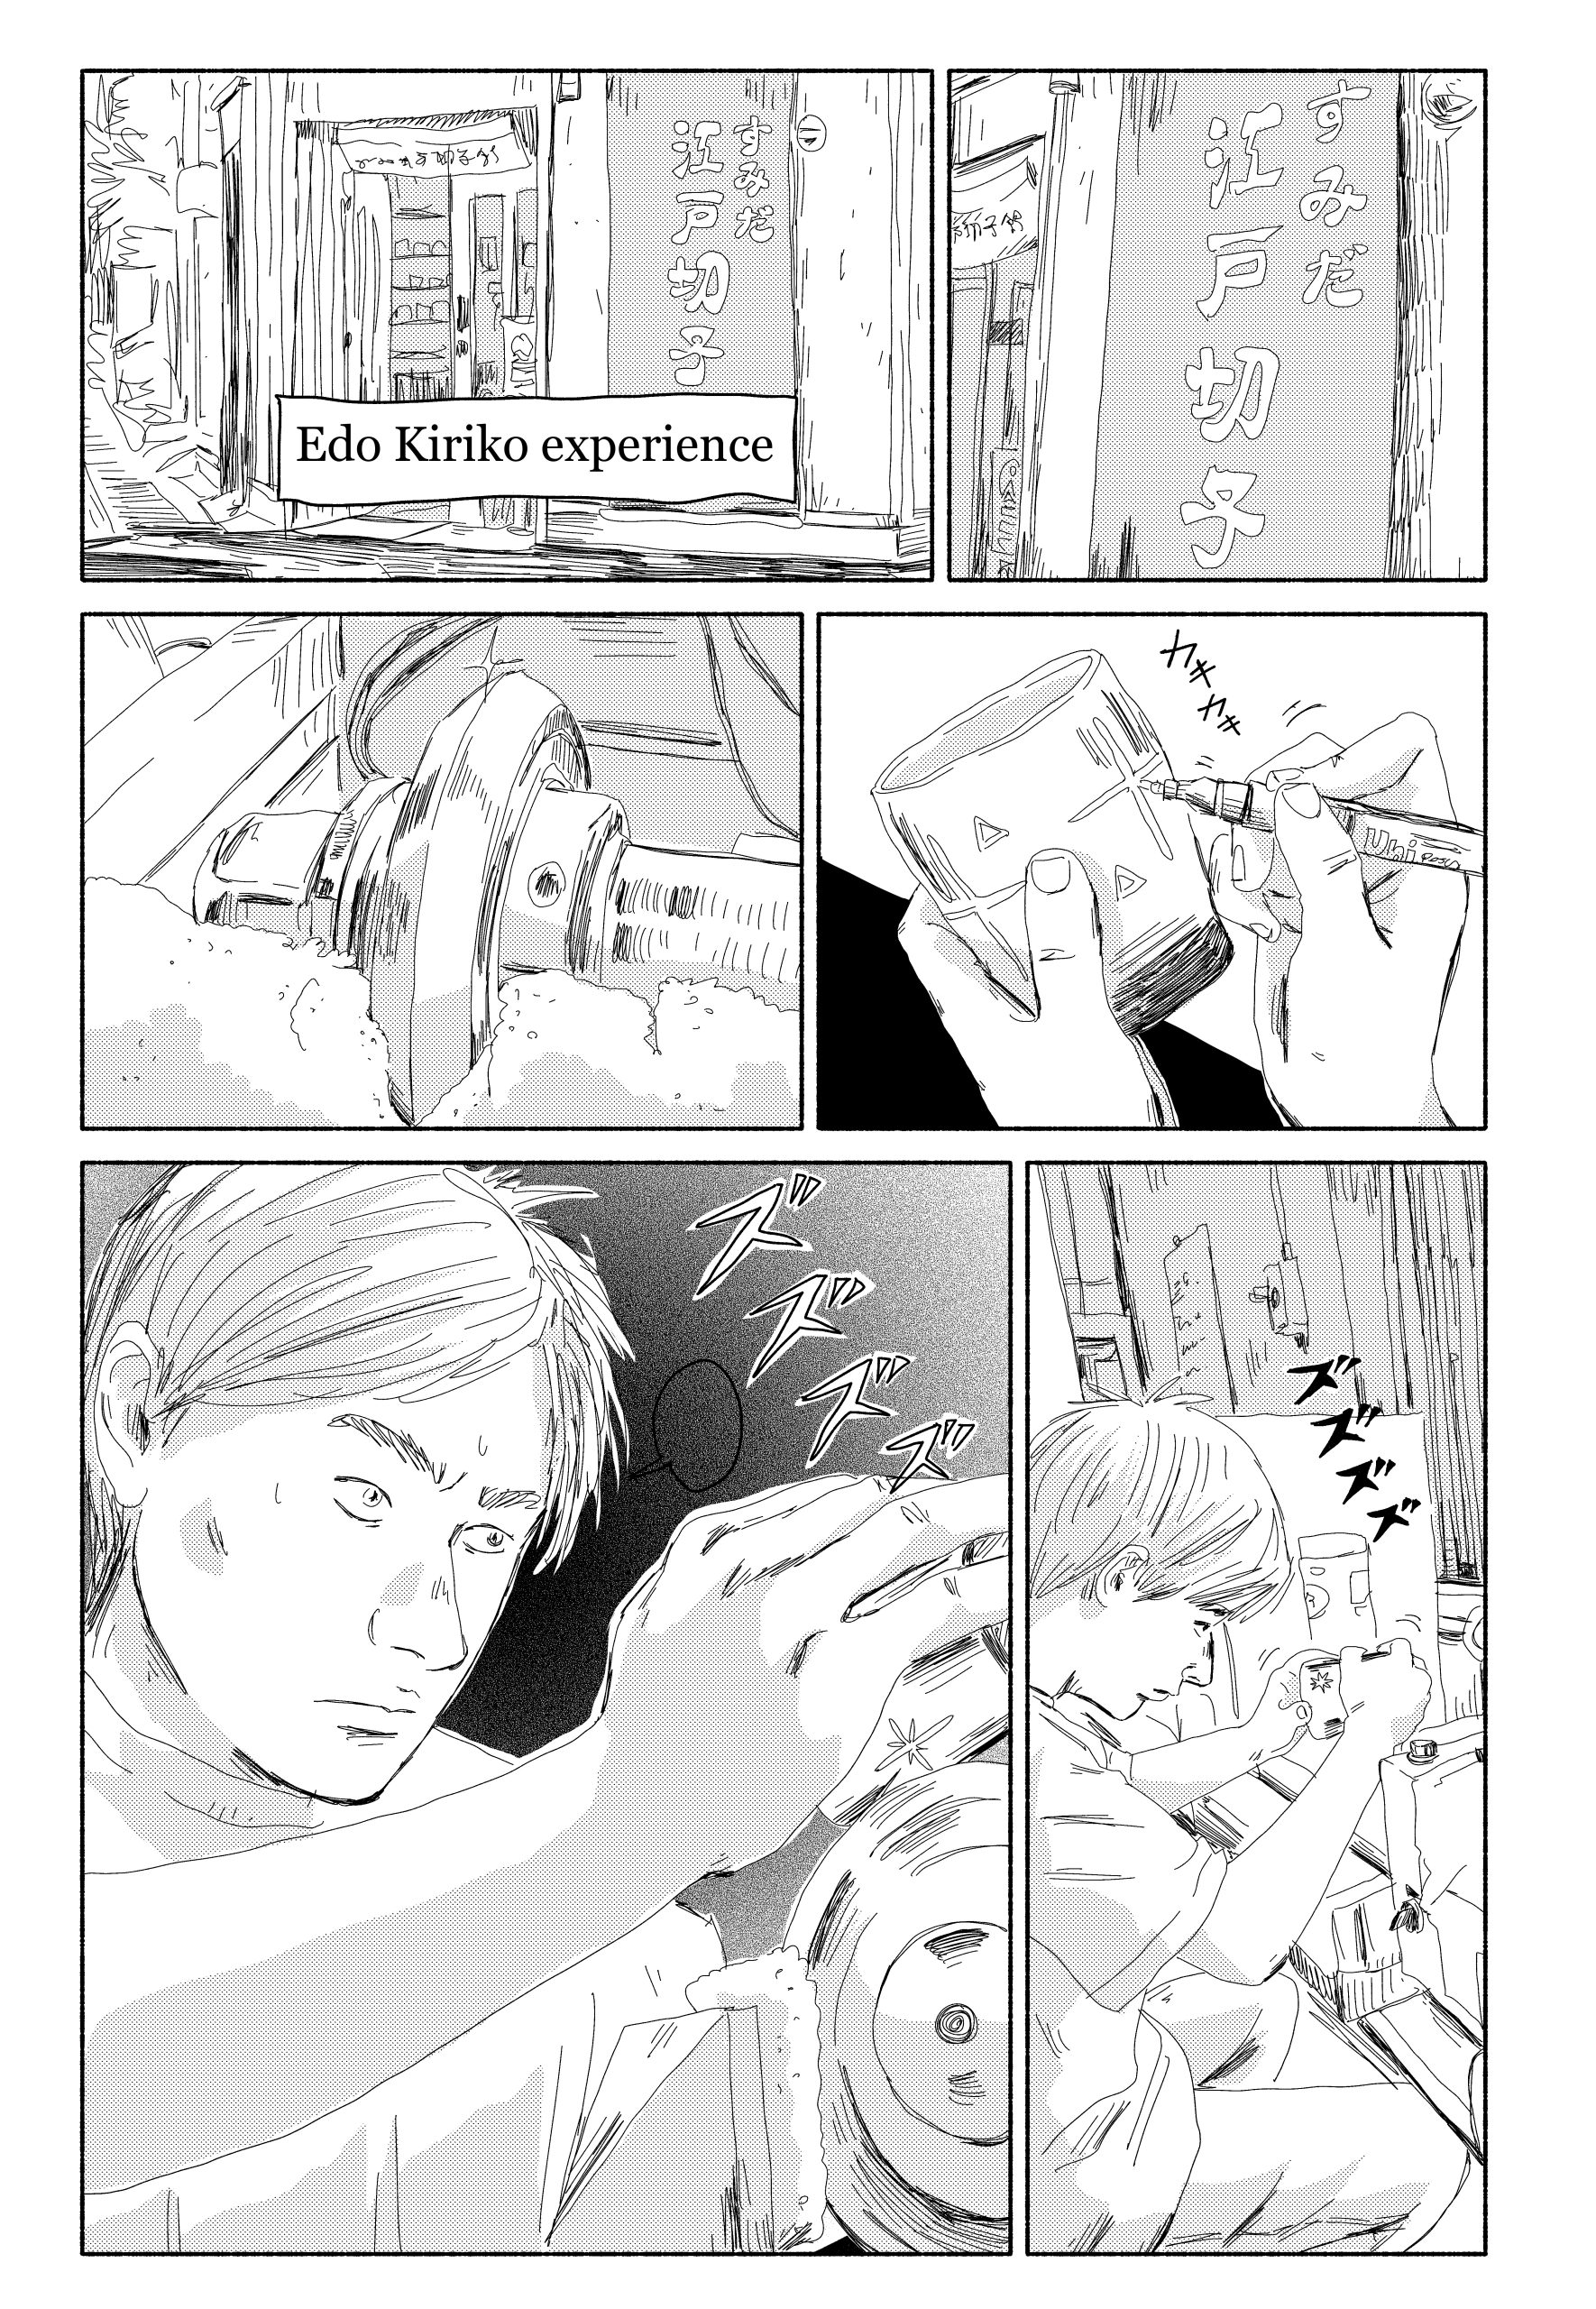 Is the “Edo Kiriko” Workshop Dangerous? : Italian Manga Artist Peppe’s Encounter with Japanese Culture Vol. 5